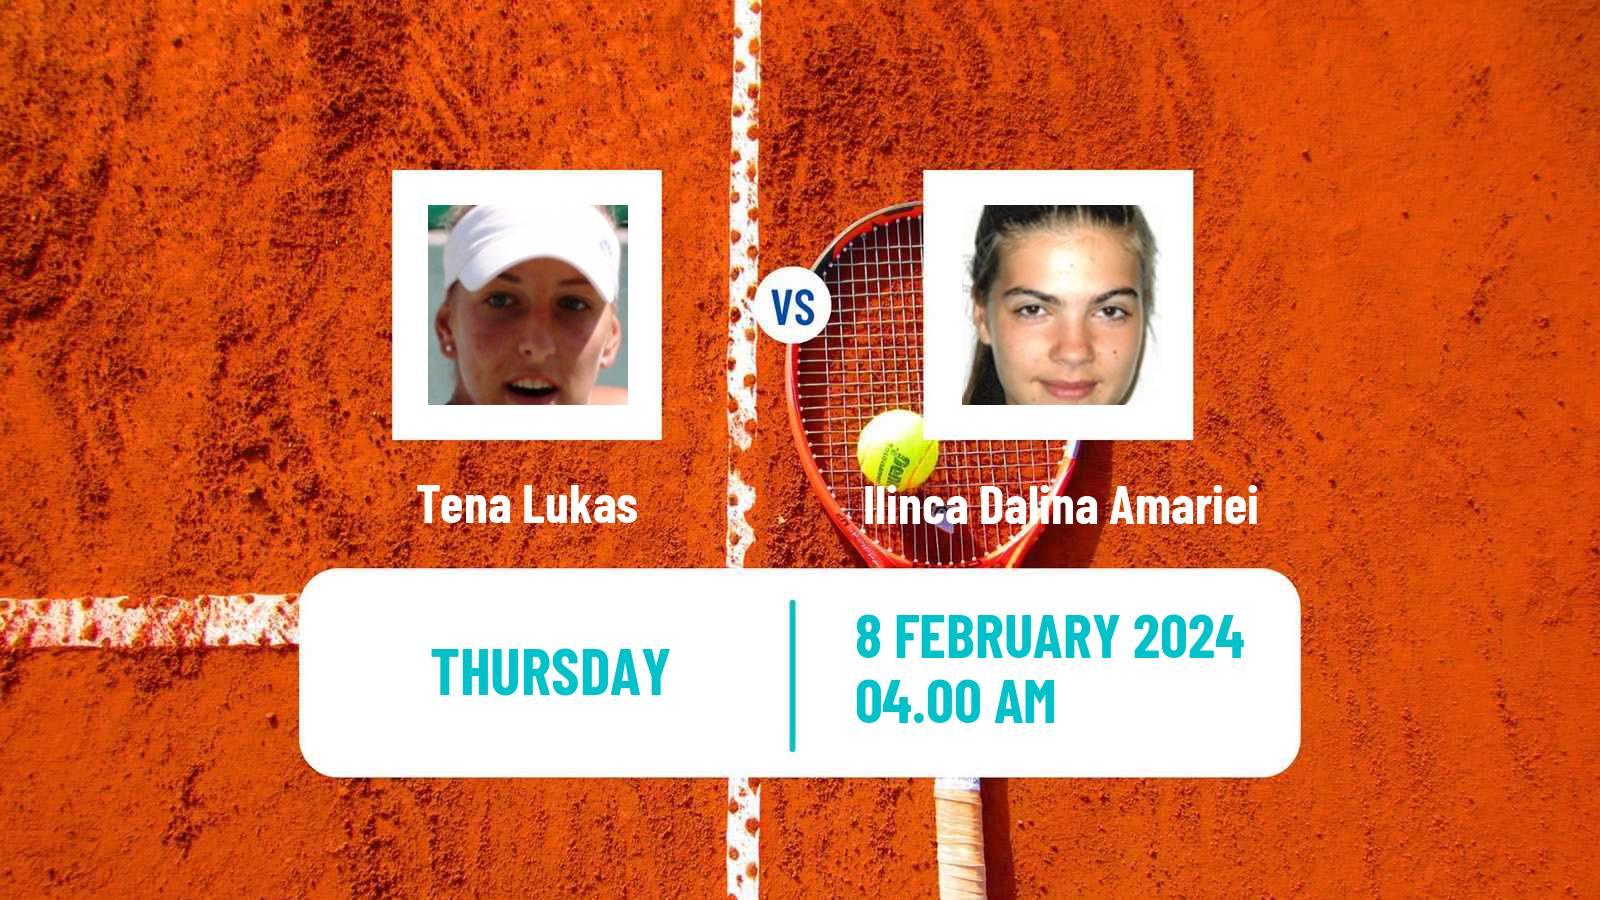 Tennis ITF W35 Antalya 2 Women Tena Lukas - Ilinca Dalina Amariei